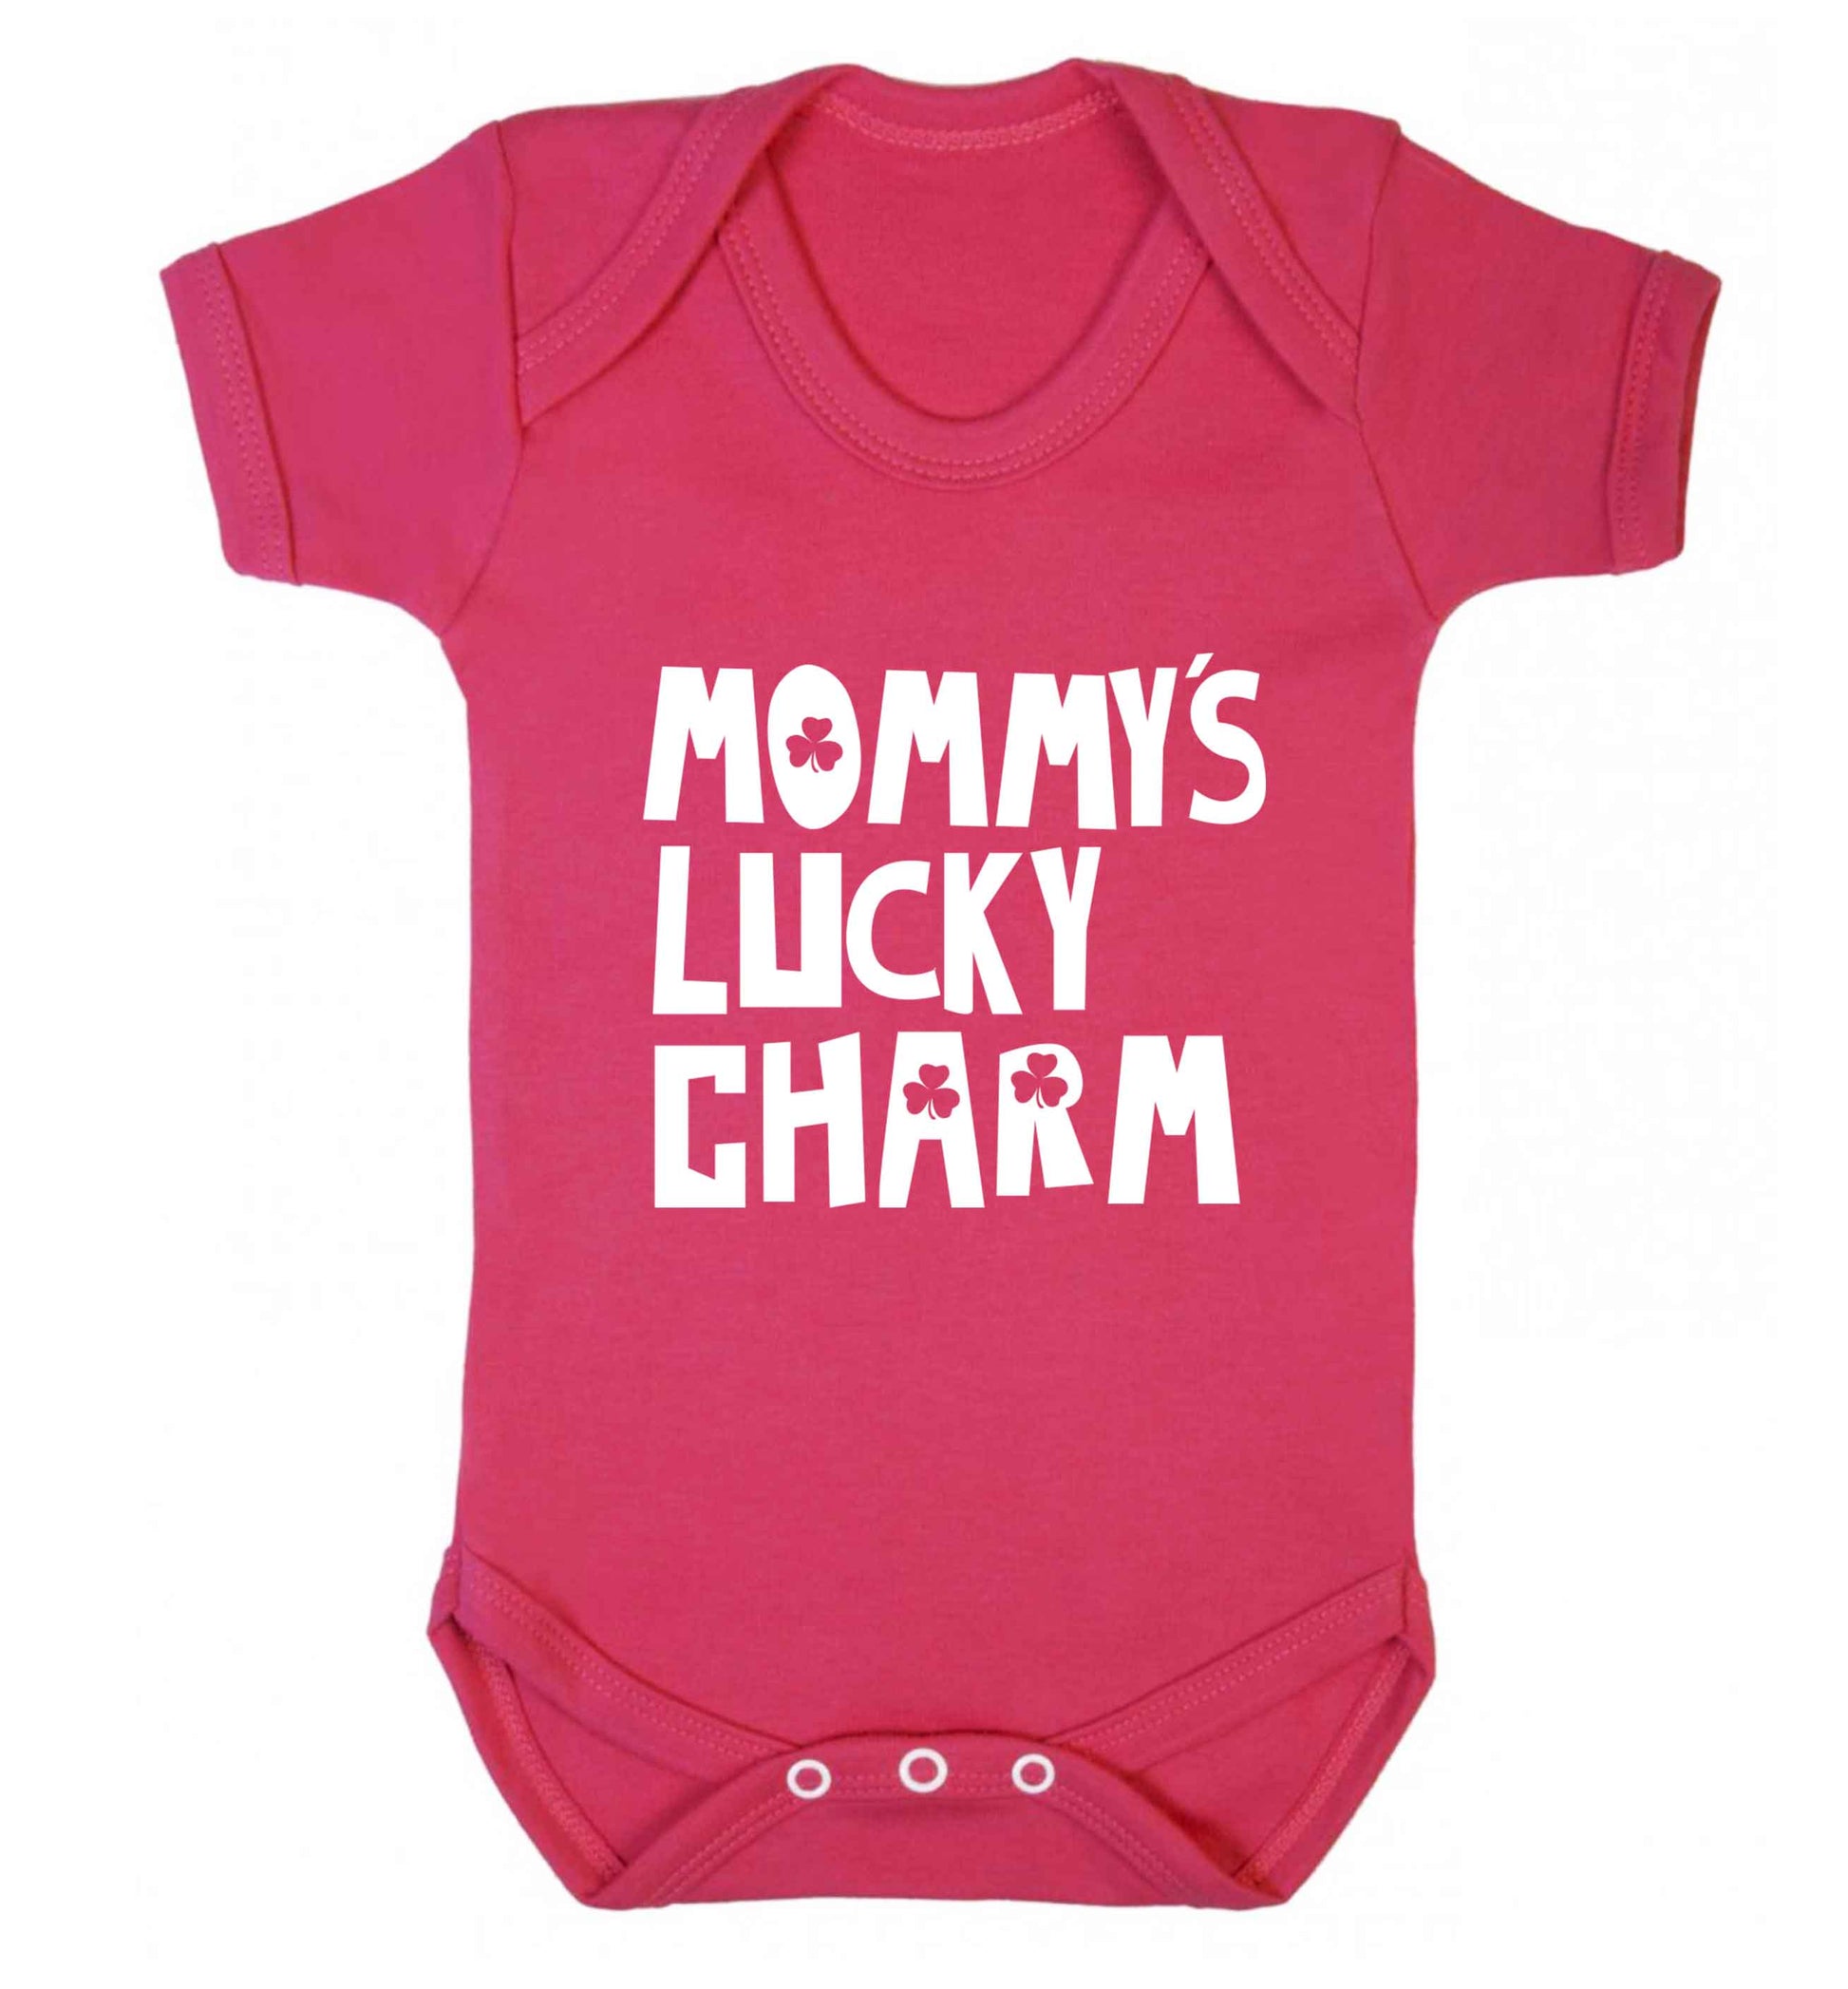 Mommy's lucky charm baby vest dark pink 18-24 months